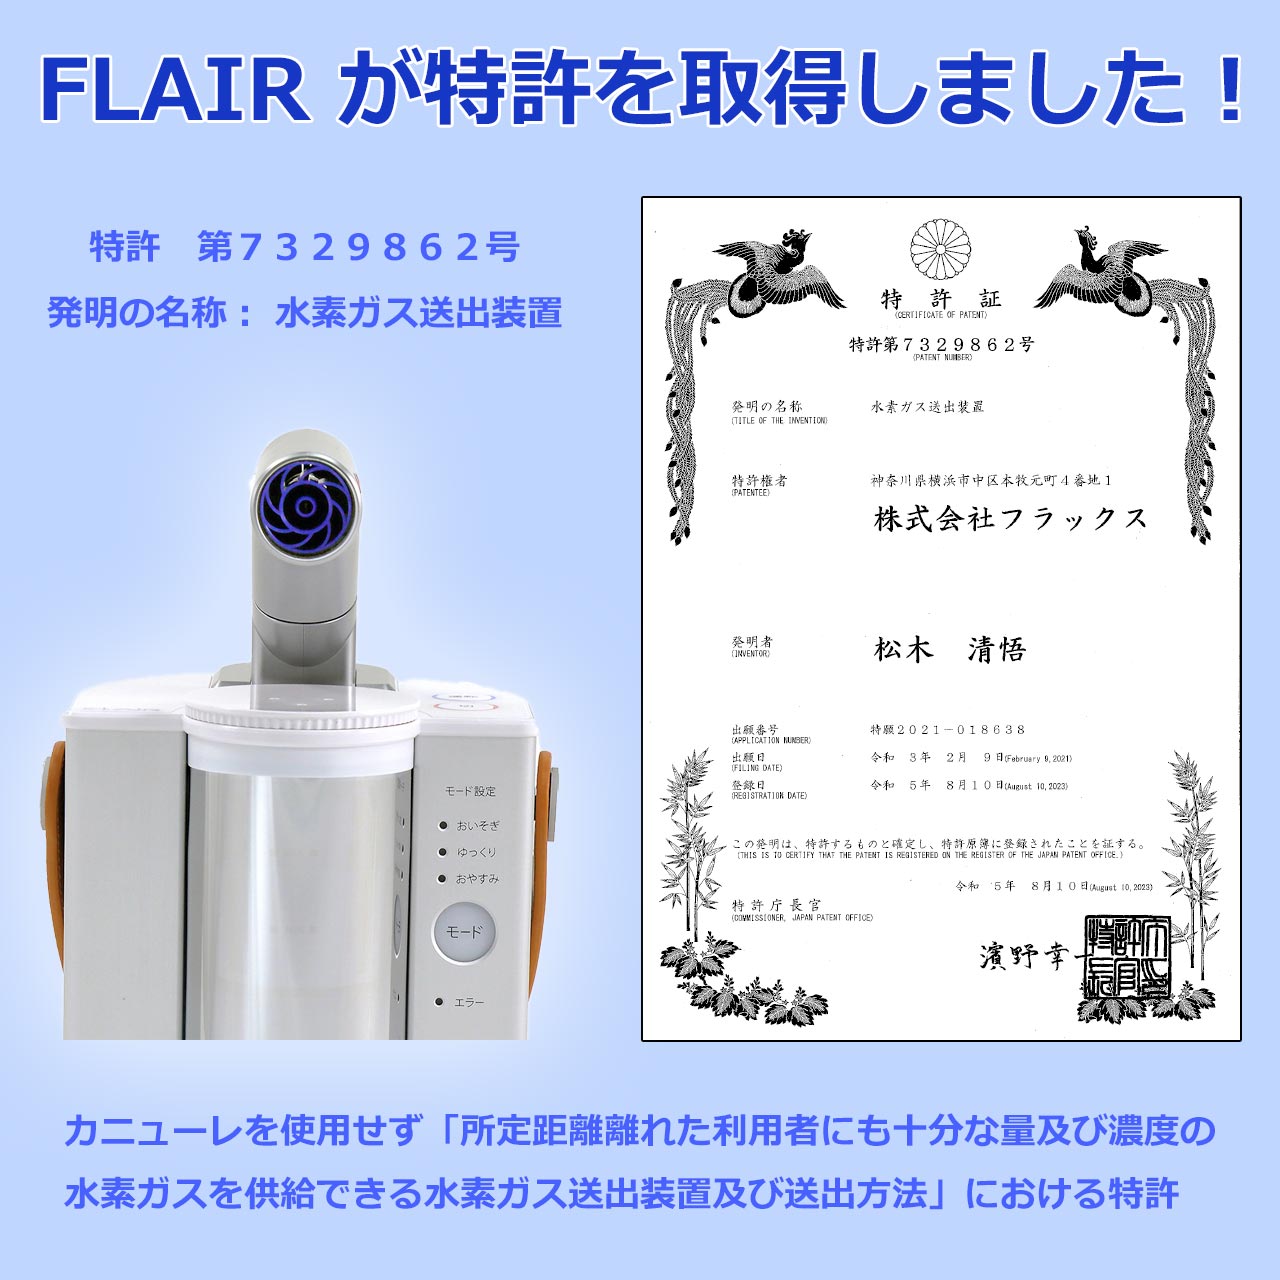 FLAIR フレアー 水素吸入器 水素吸引器 水素ガス生成器 水素エアー発生器 日本製 チューブ装着不要 特許取得済 フラックスの独自技術  スパイラル気流